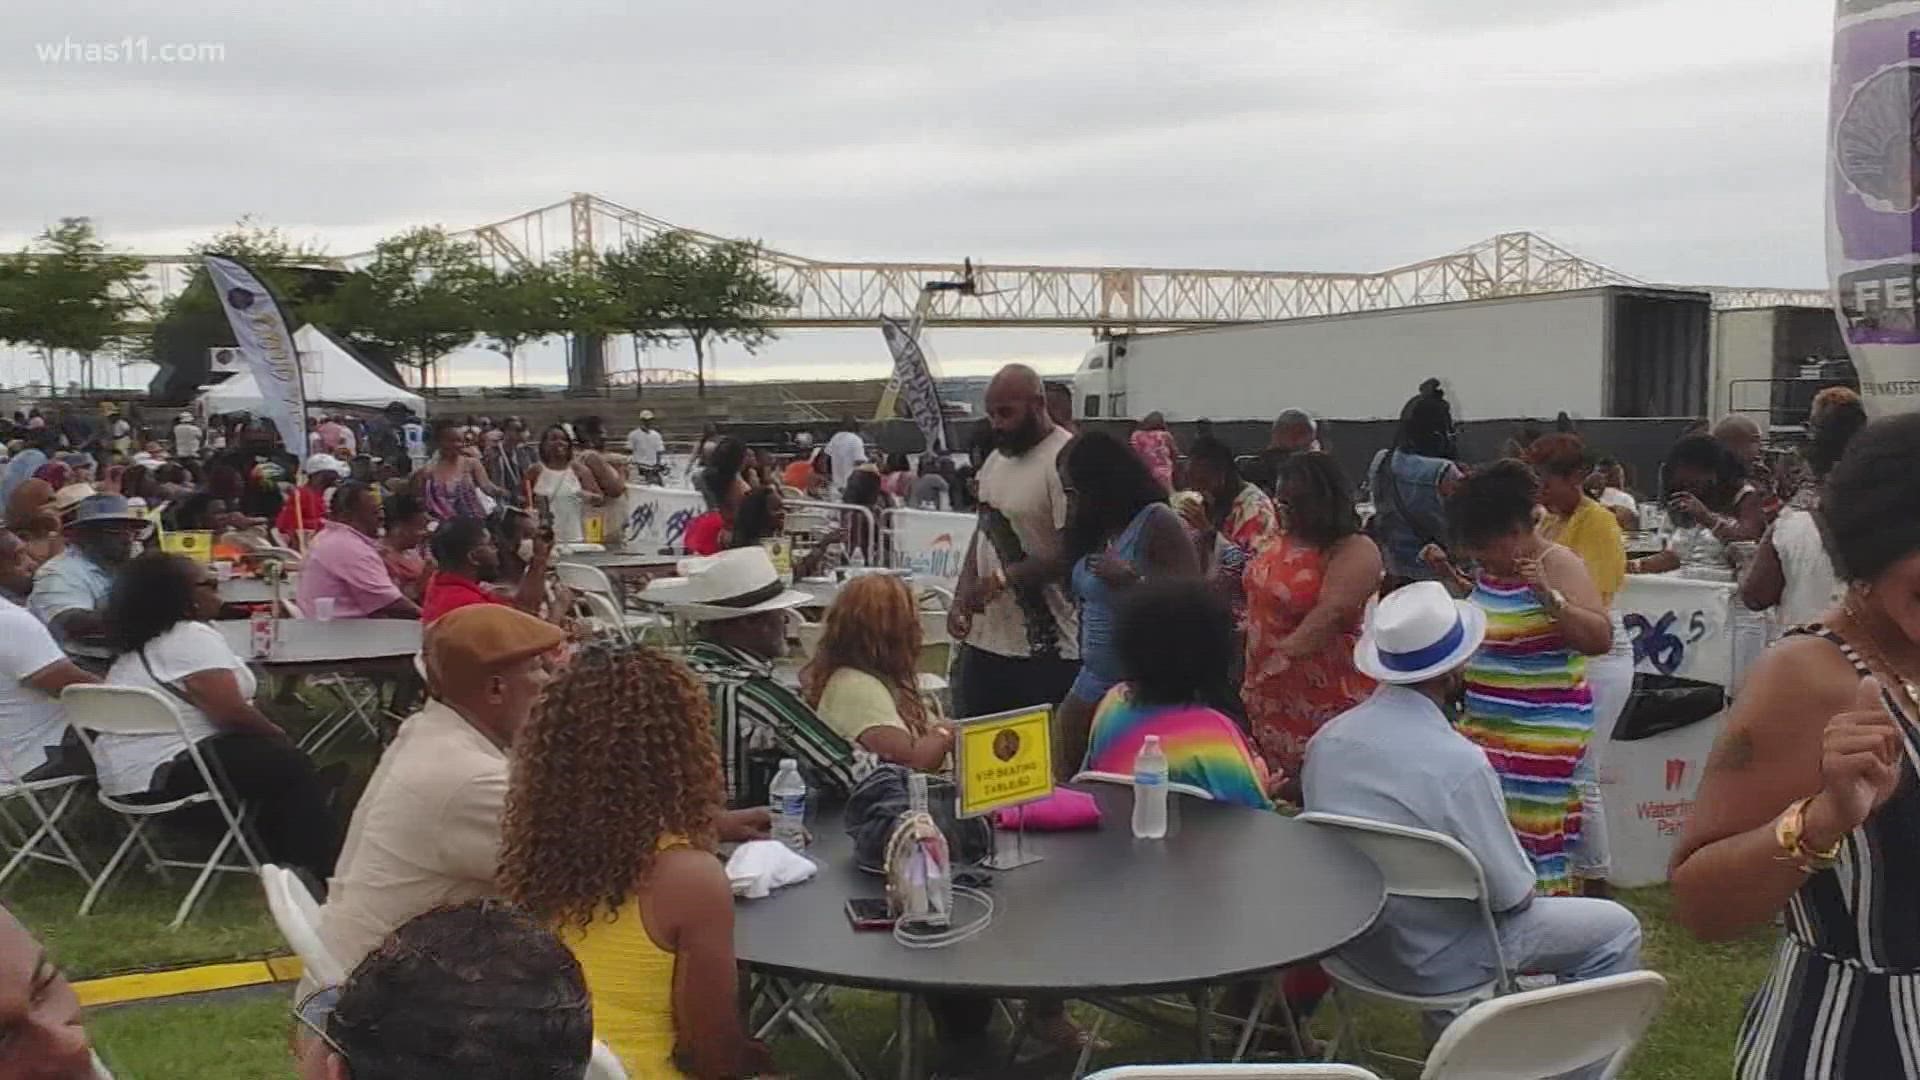 Louisville's Funk Fest brings crowds, fun to Waterfront Park